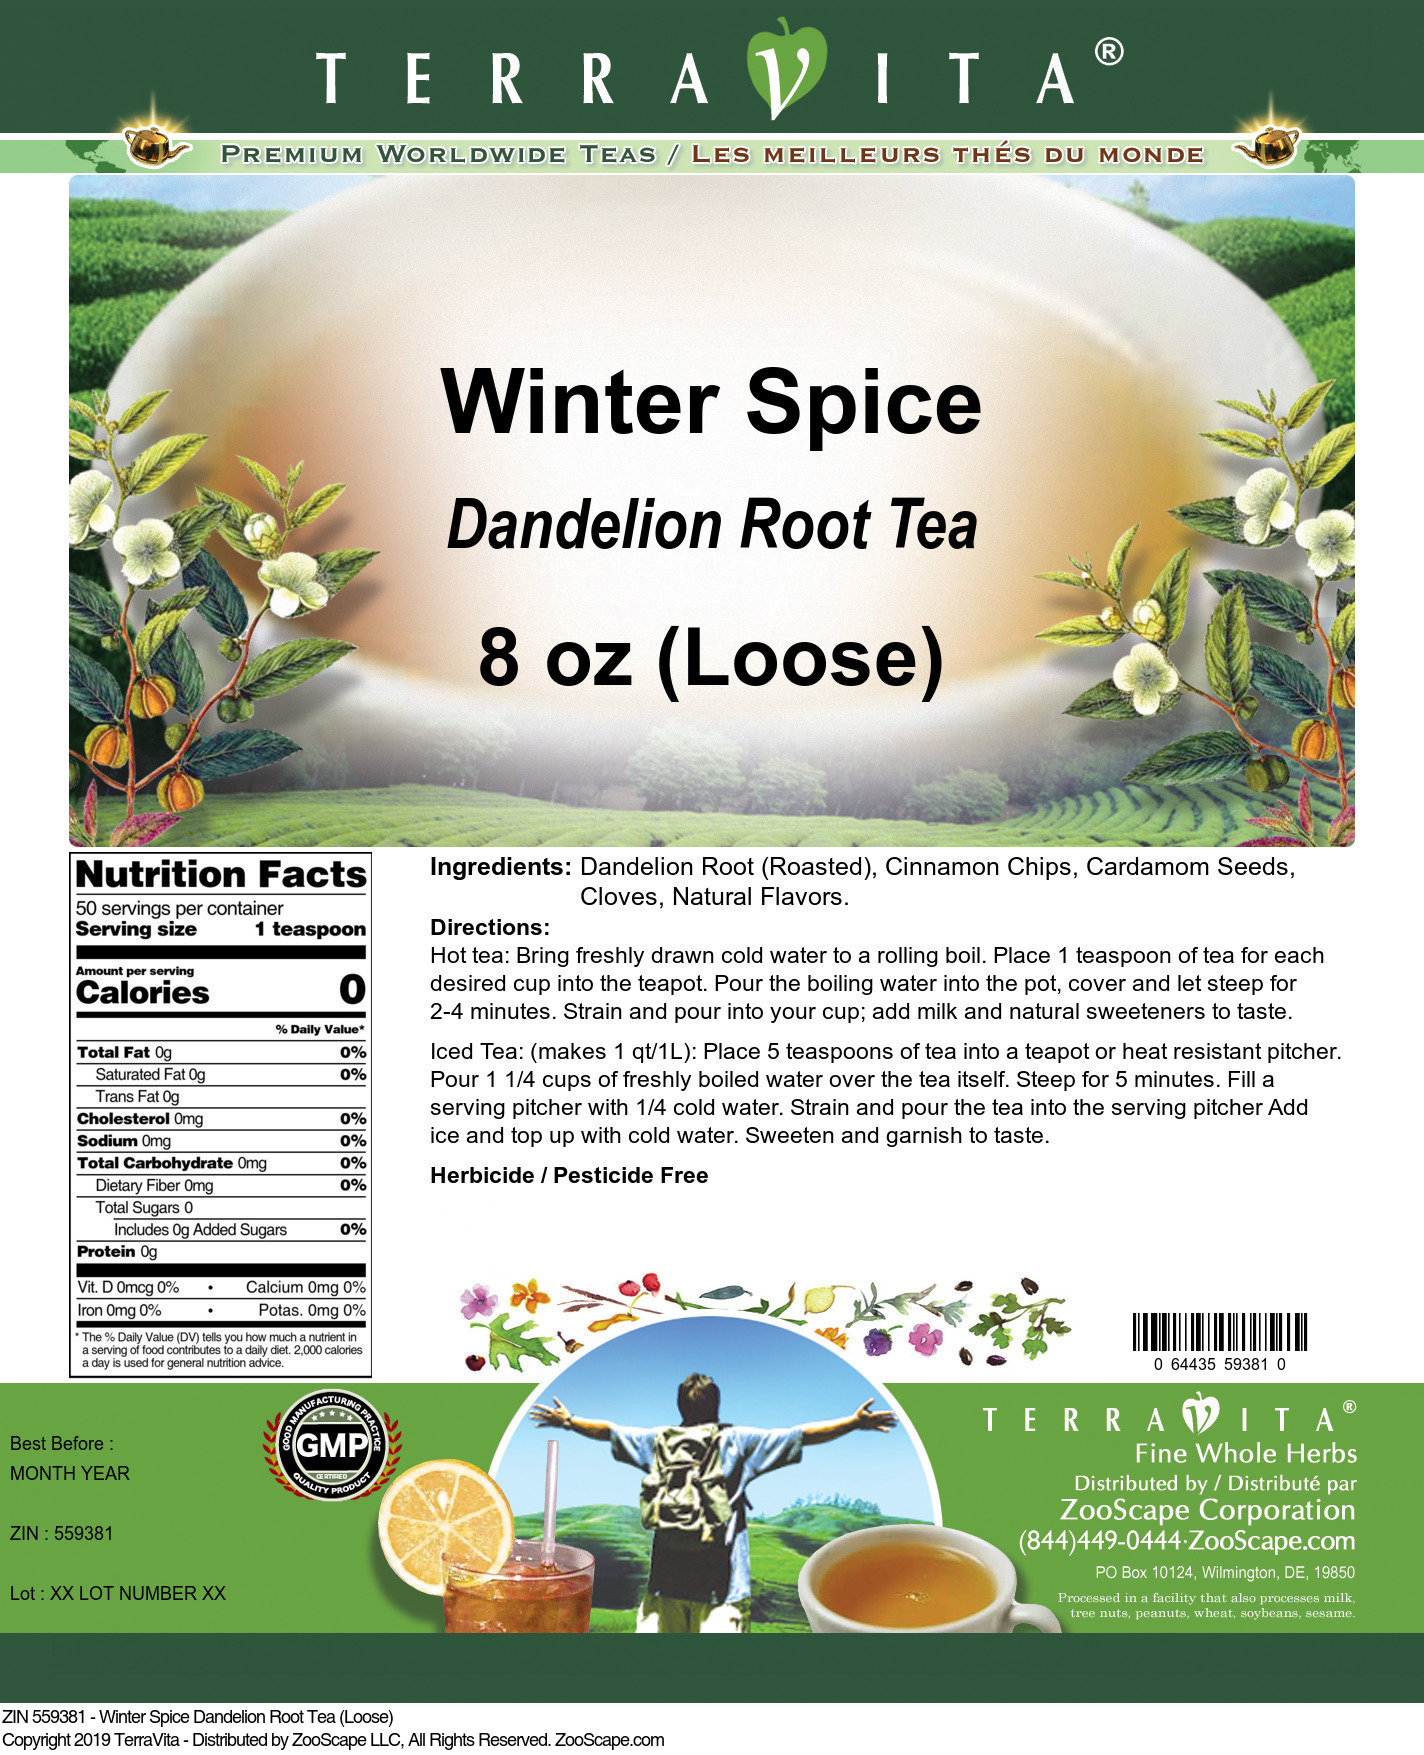 Winter Spice Dandelion Root Tea (Loose) - Label